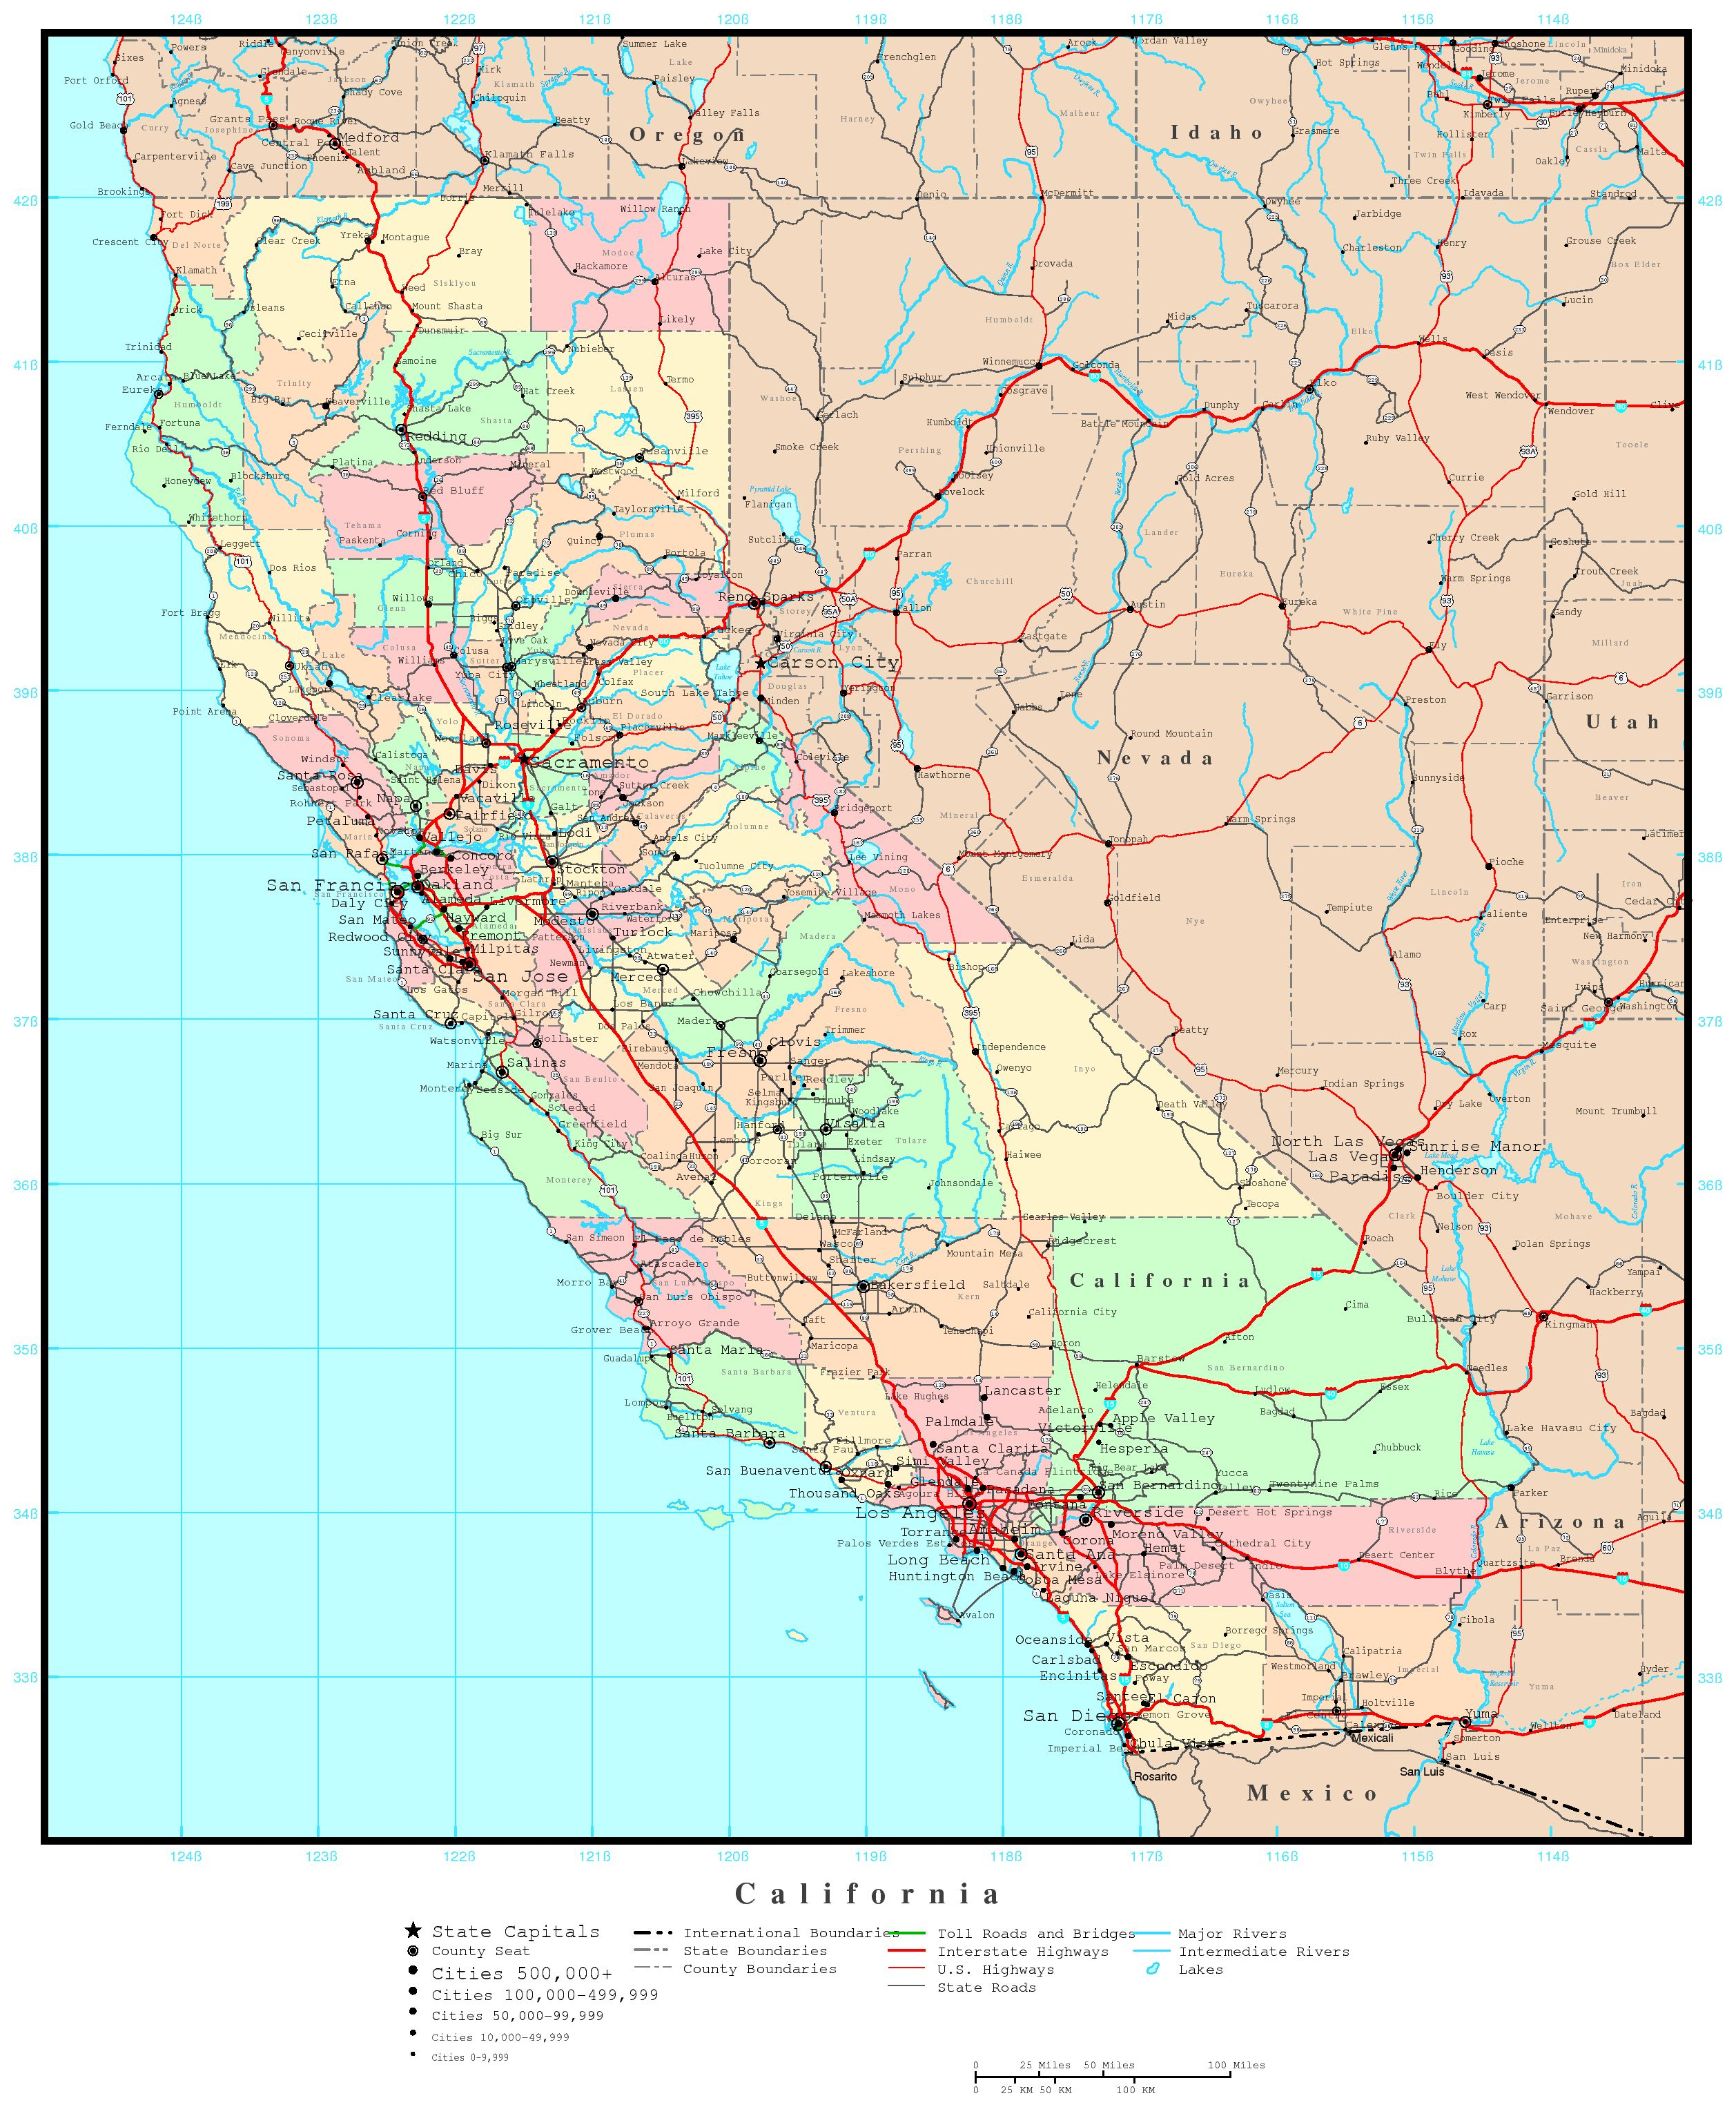 Road Map Of Nevada And California - Klipy - Road Map Of California Nevada And Arizona